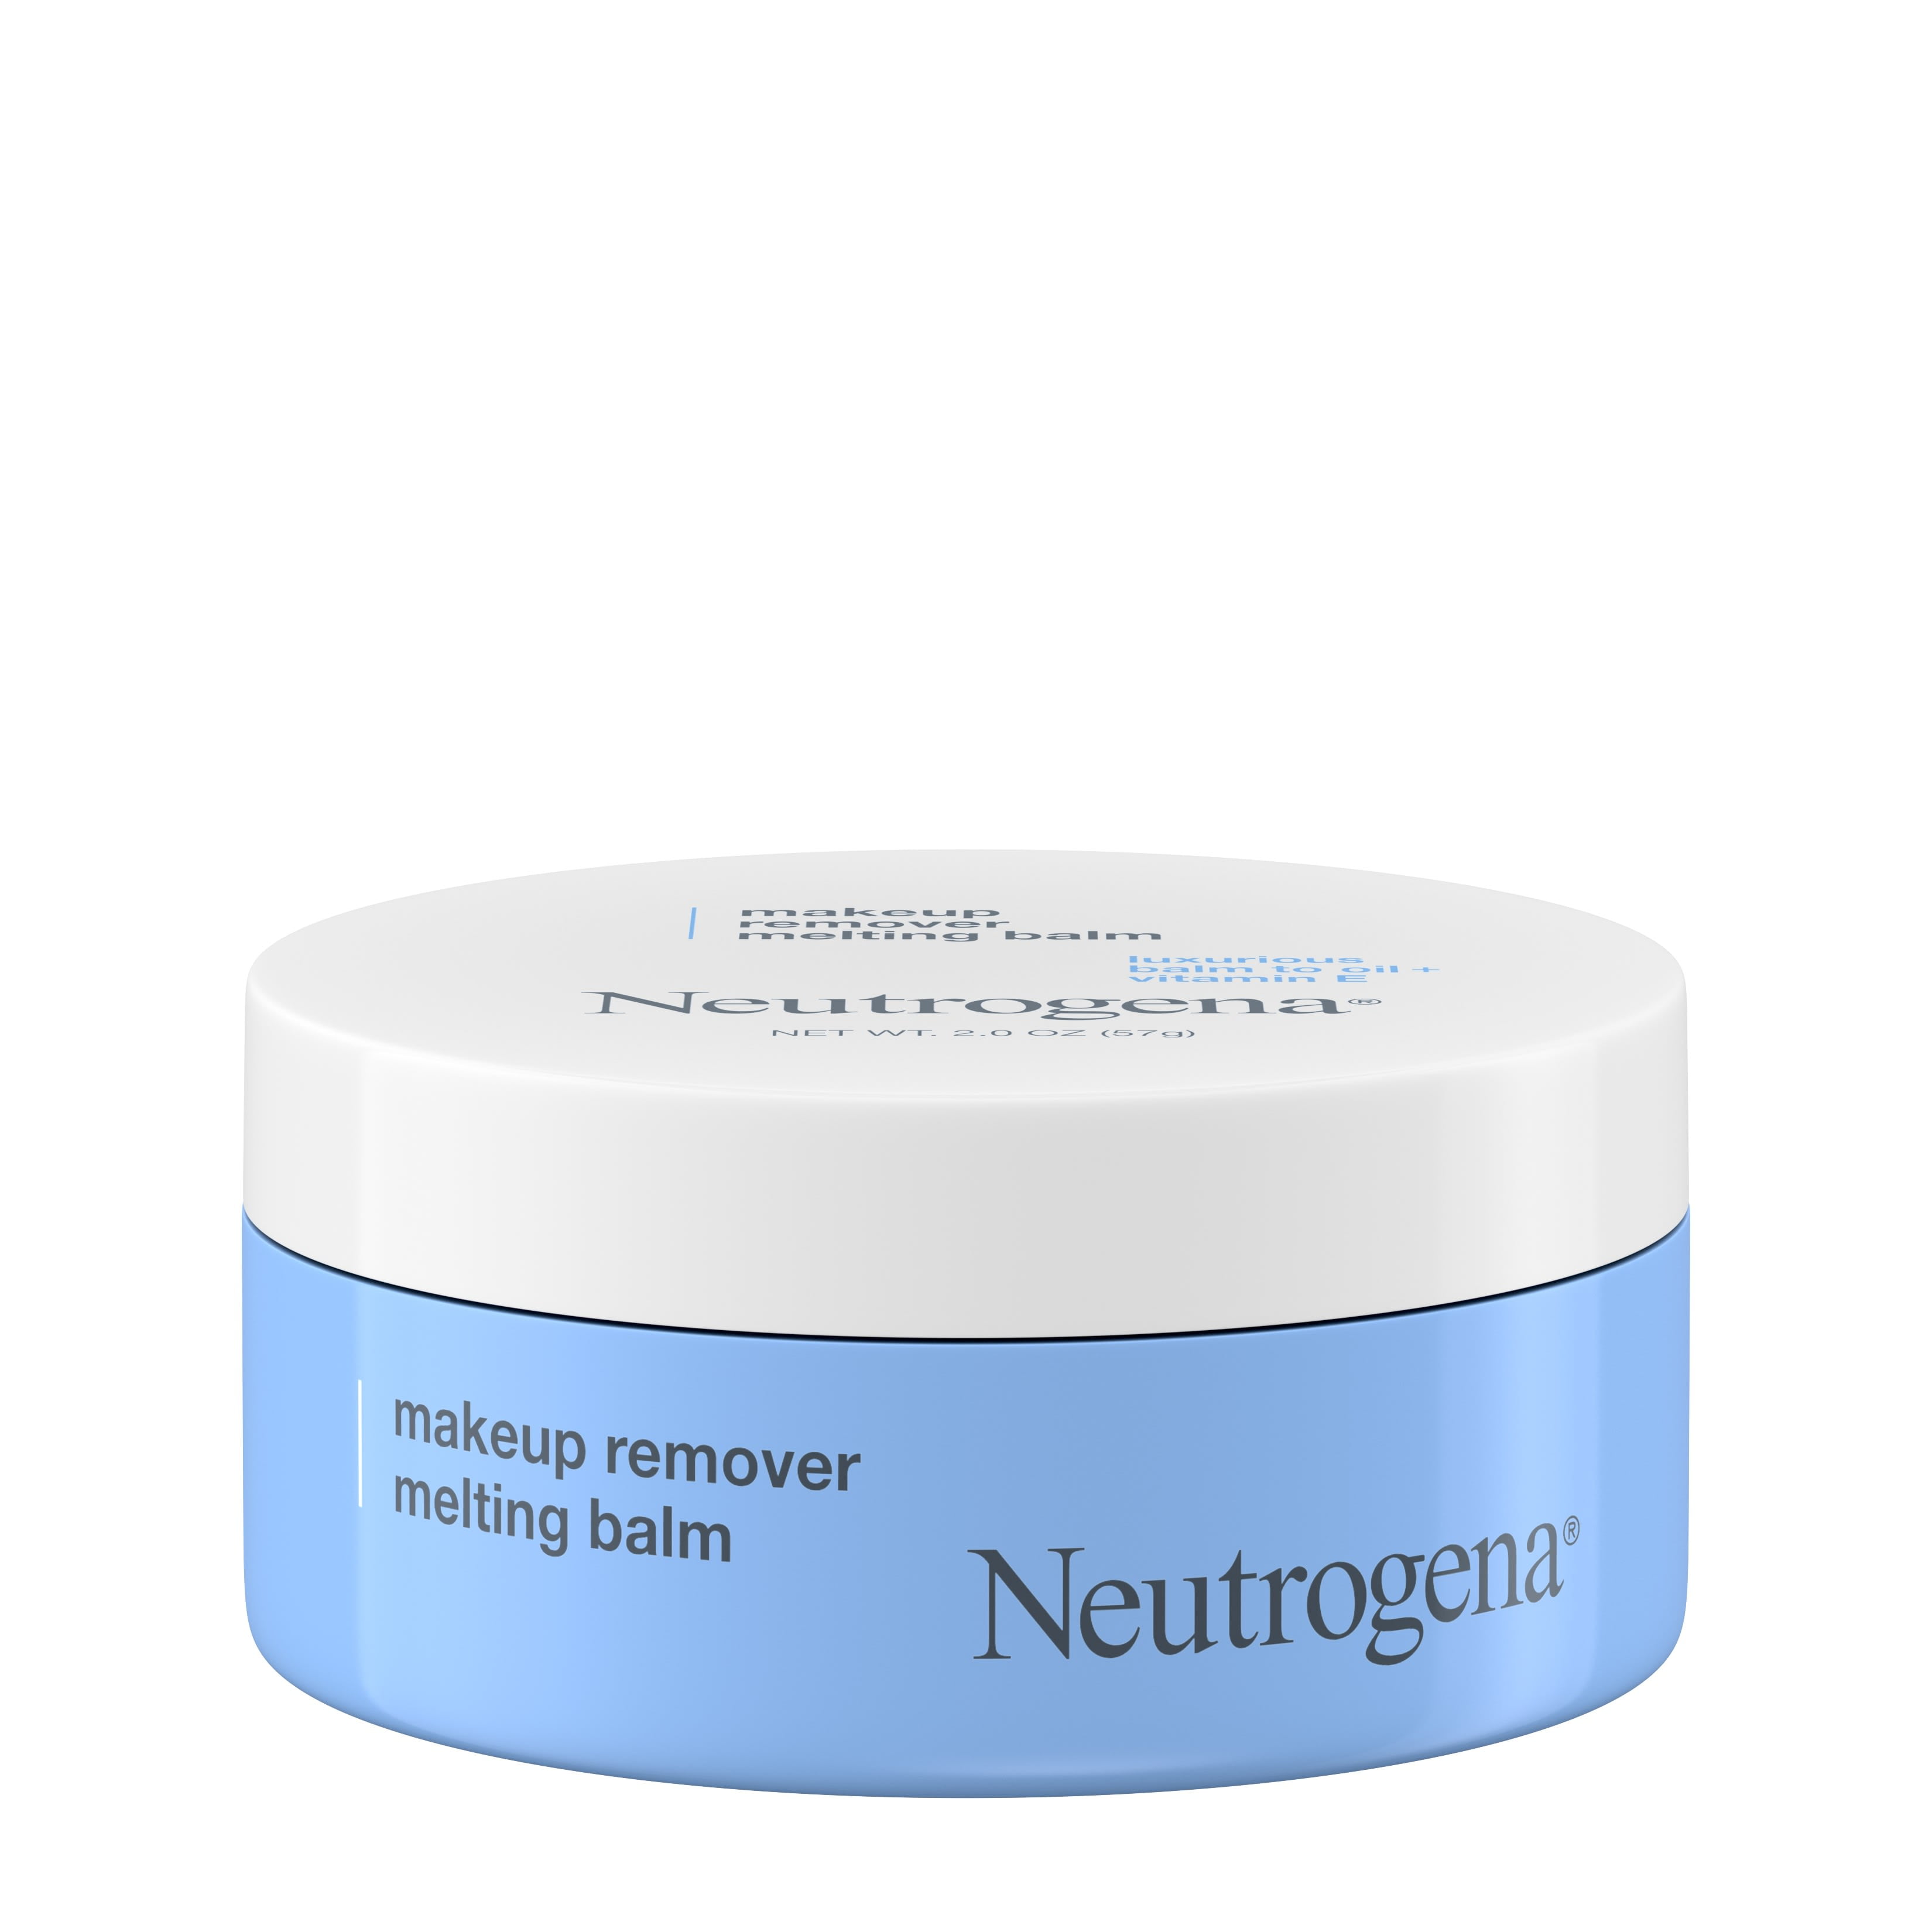 Neutrogena Makeup Remover Melting Balm to Oil with Vitamin E, 2.0 oz